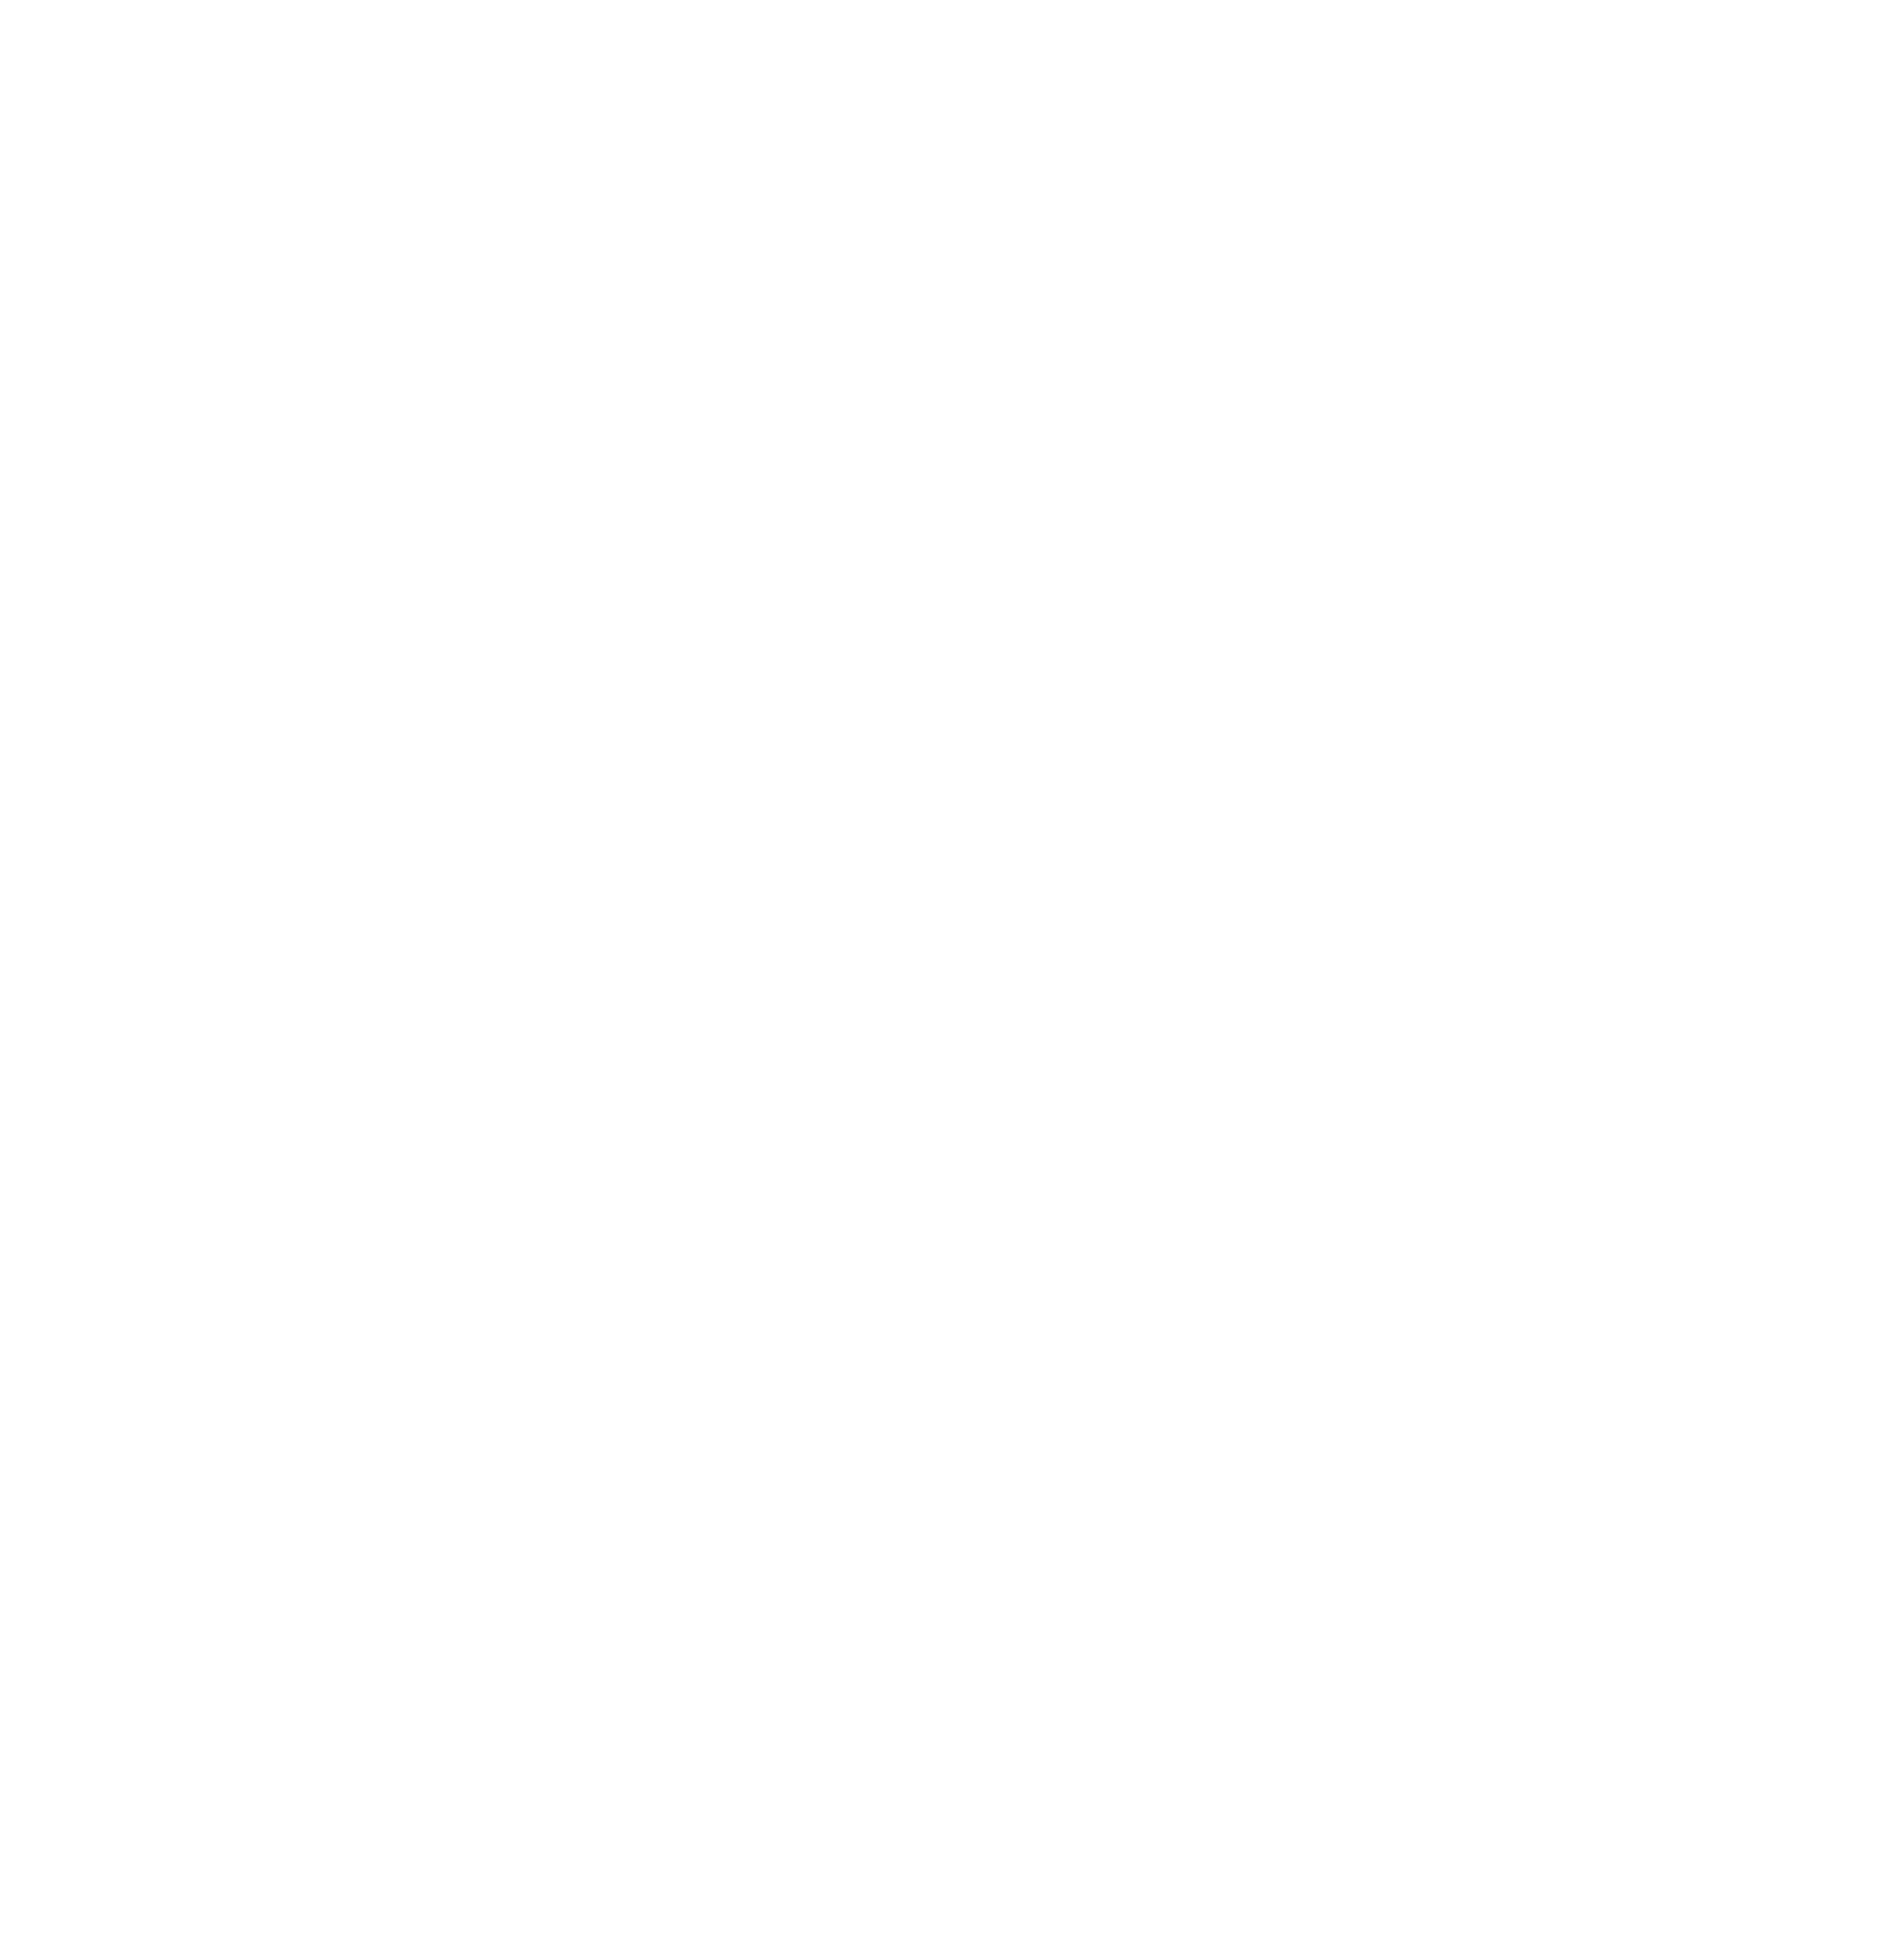 Pixel art adaptation of the Twitter/X logo